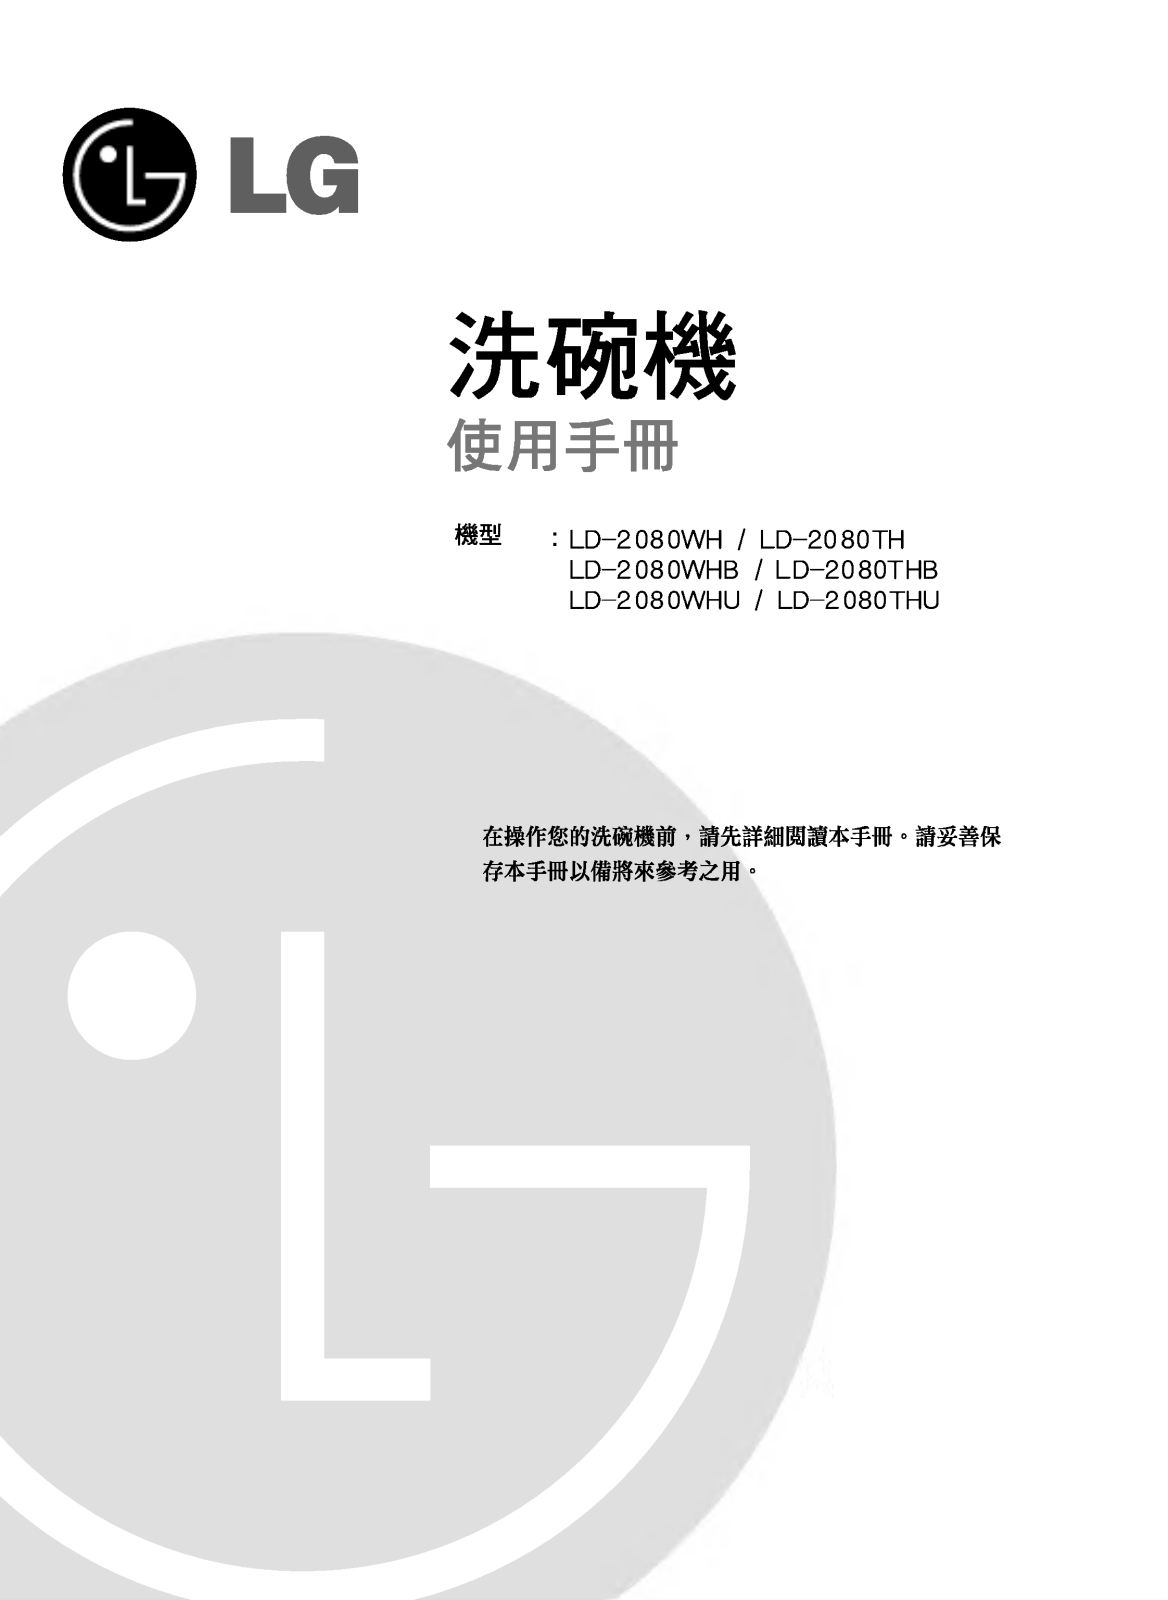 LG LD-2080TH User manual